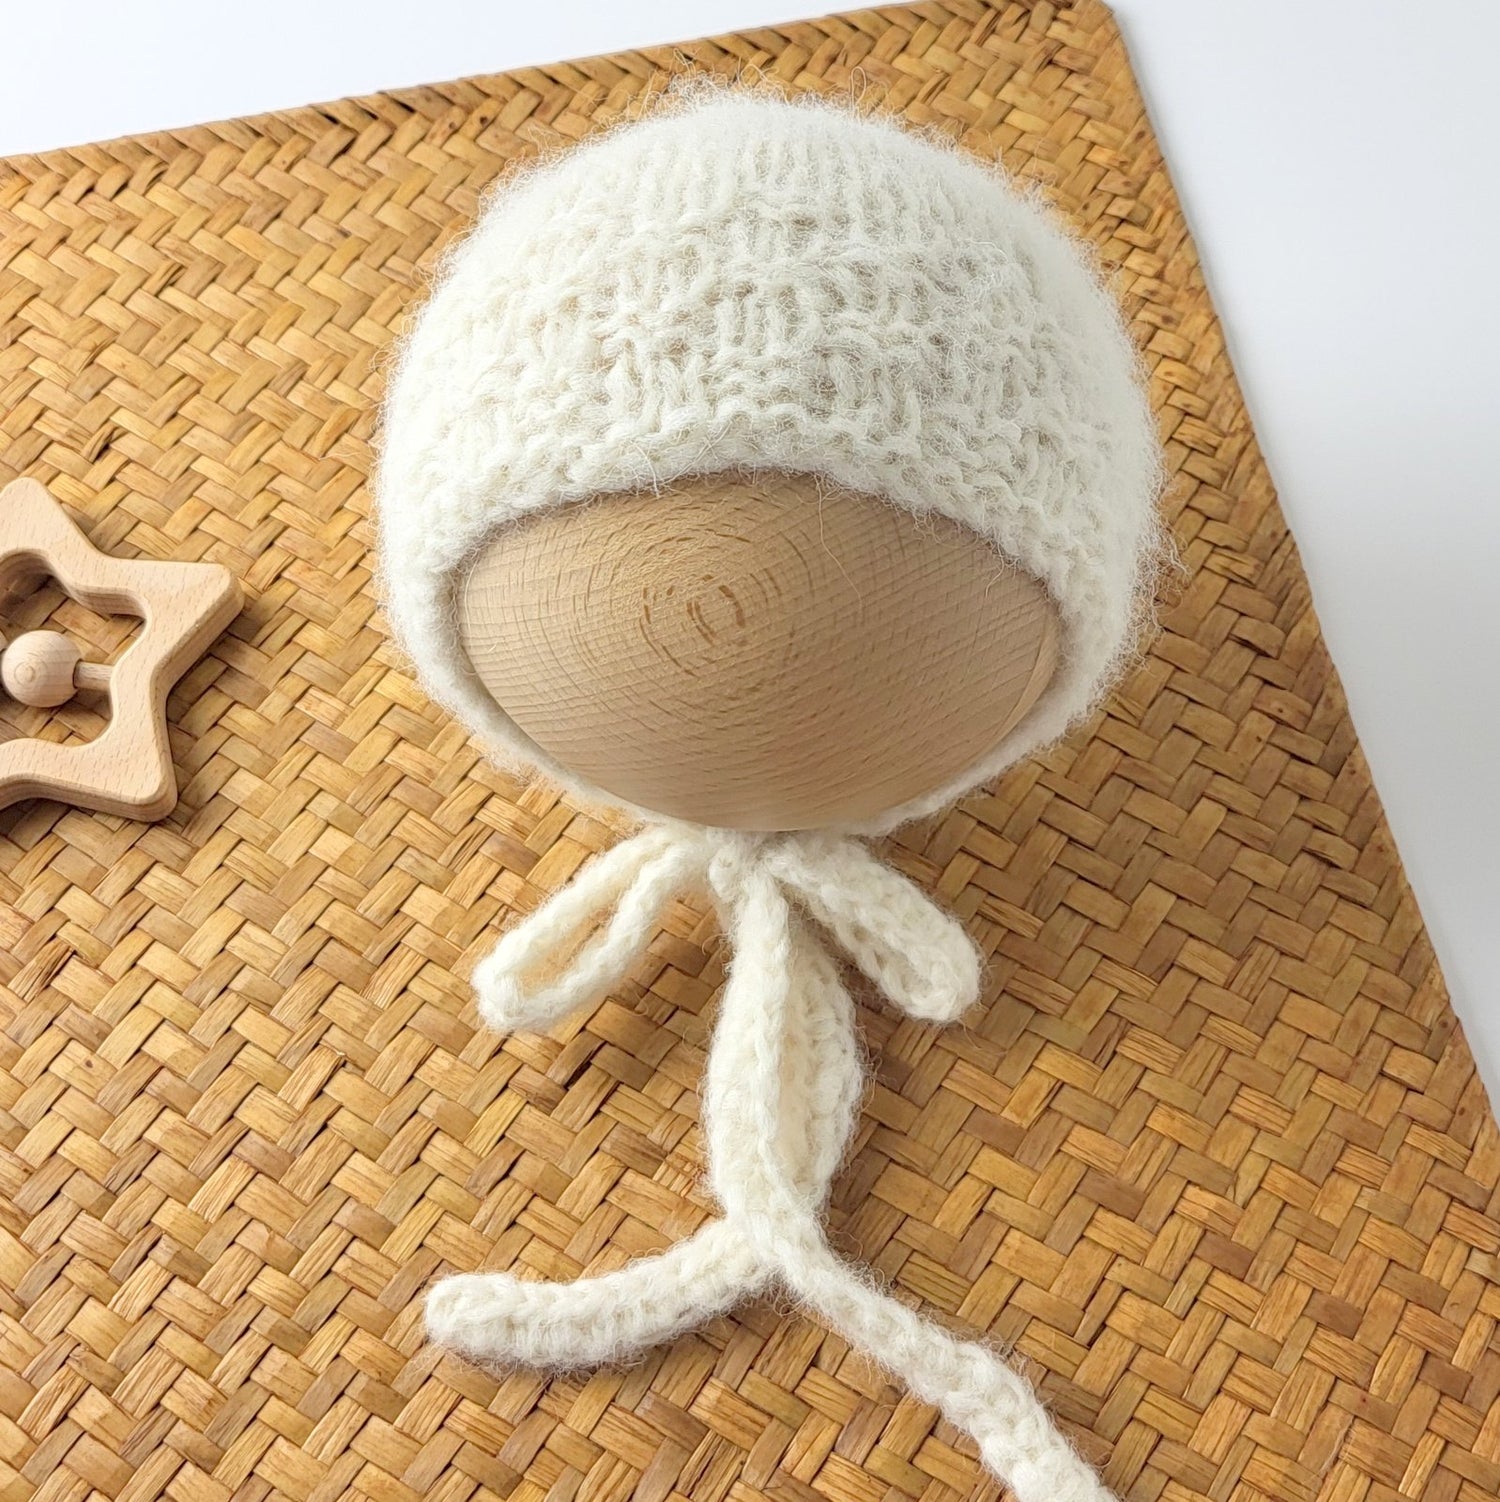 knitted cream bonnet for a newborn baby